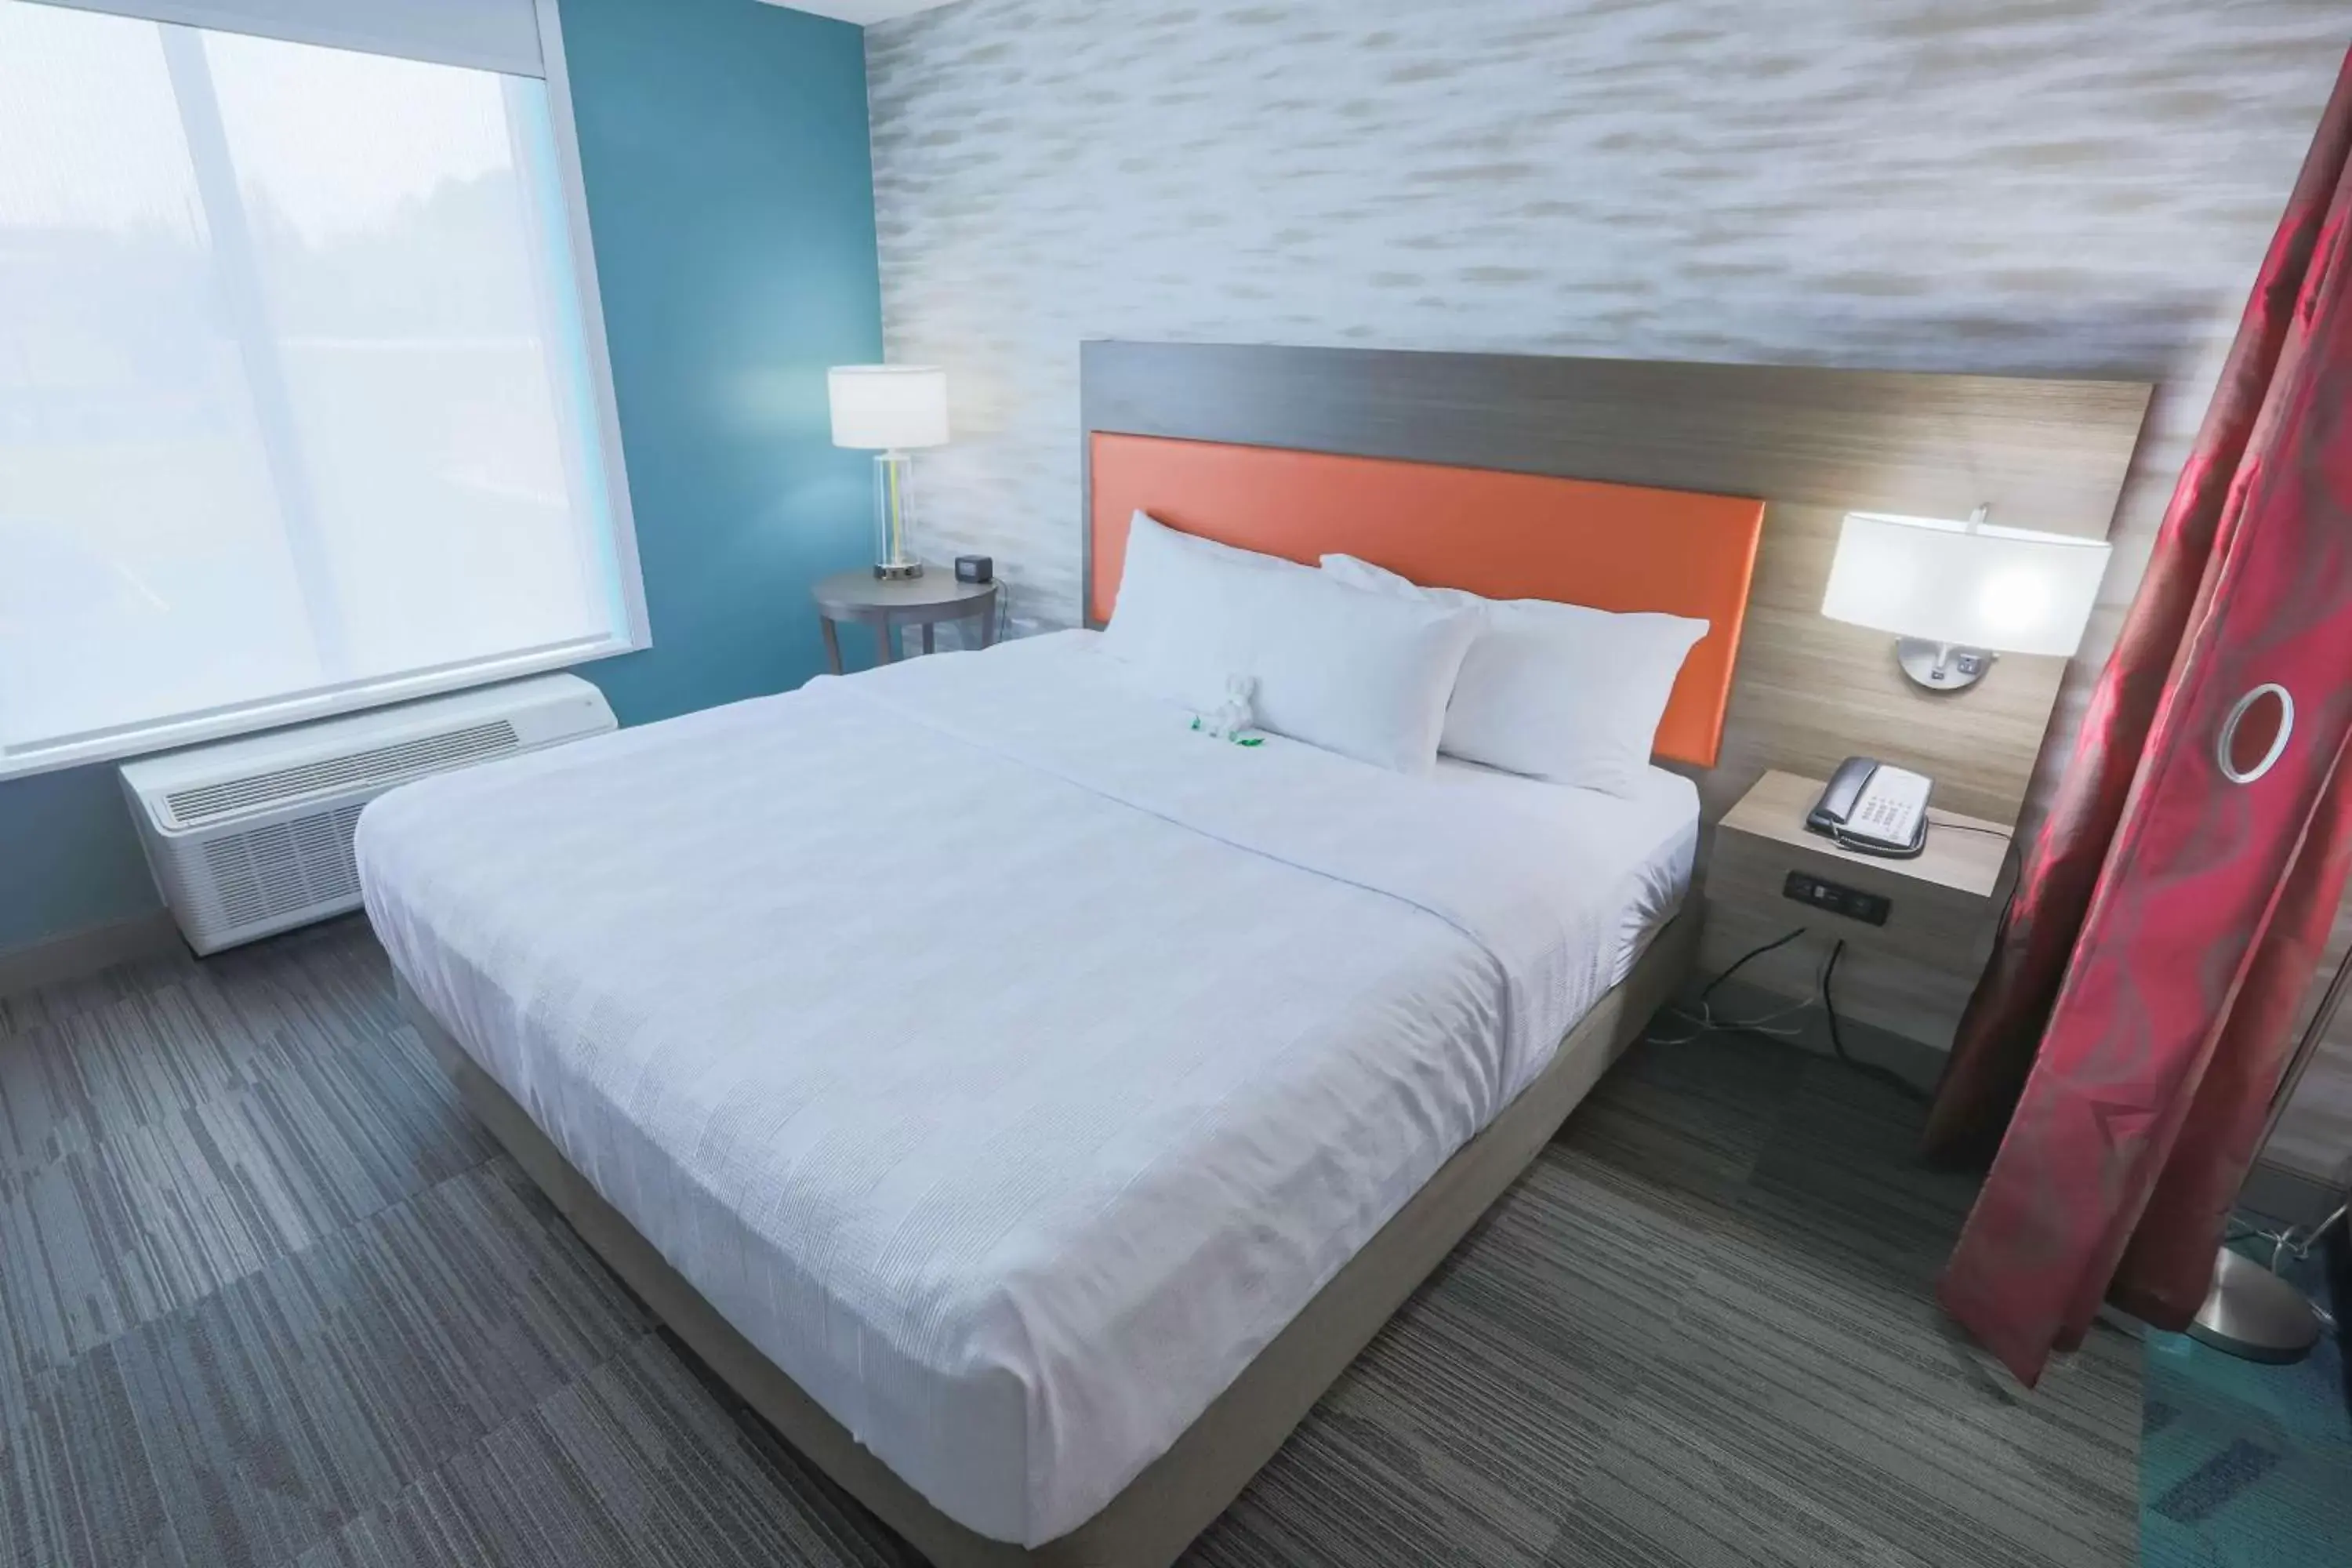 Bed in Home2 Suites By Hilton Cumming Atlanta, Ga